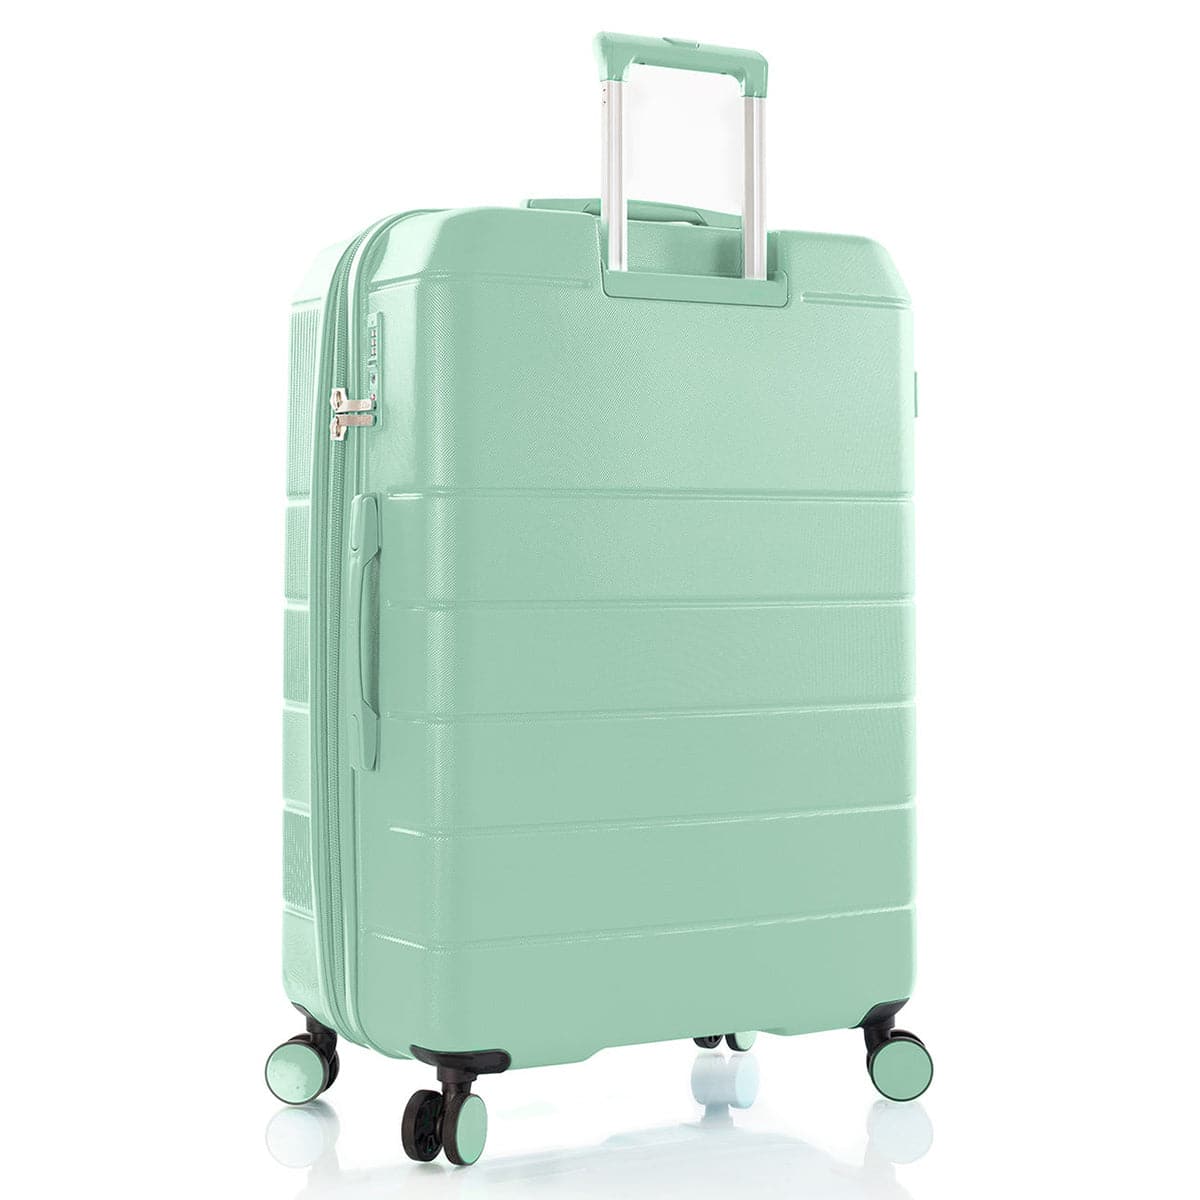 Heys Neo 30" Spinner Luggage